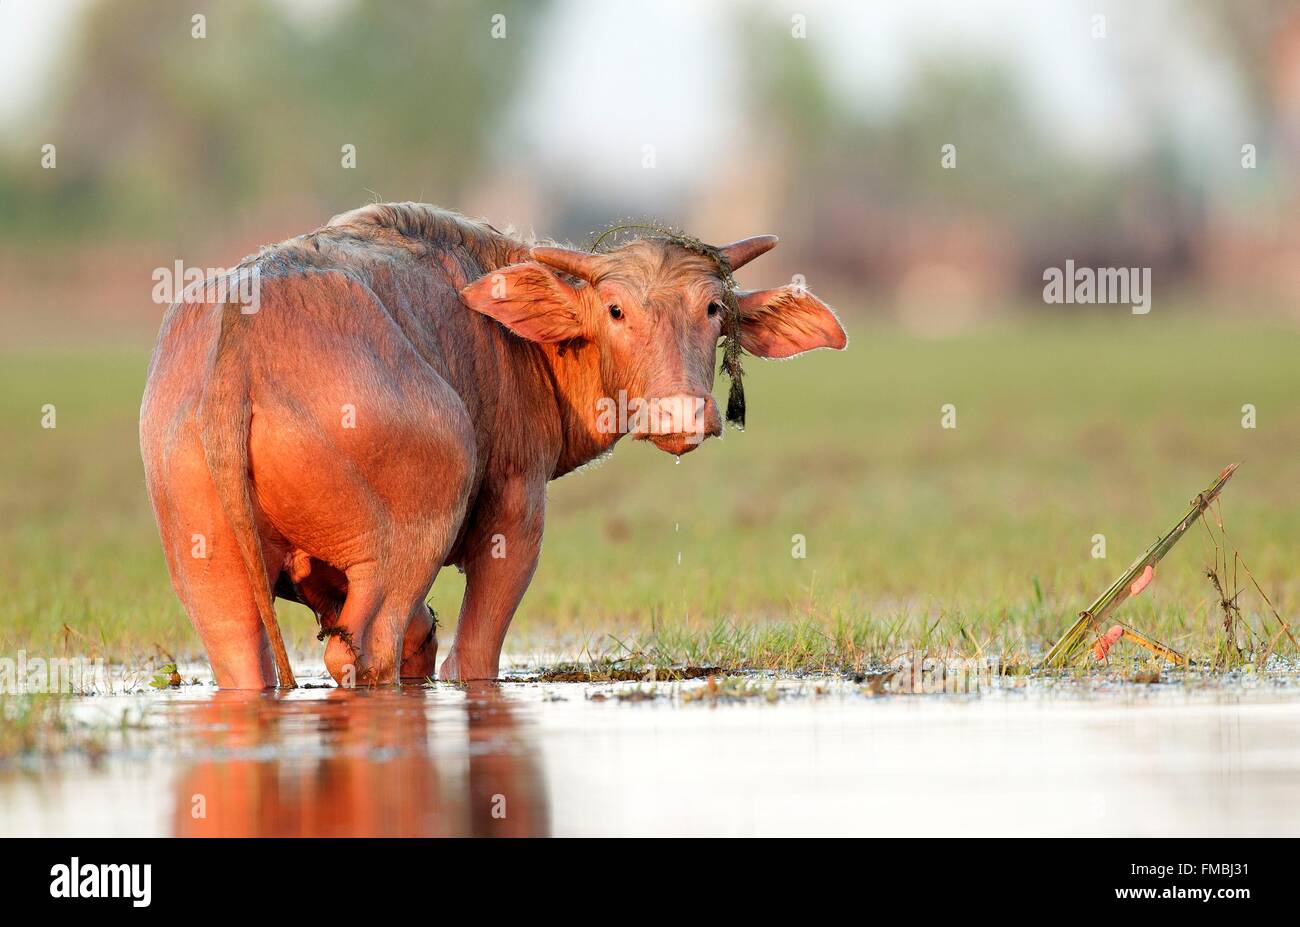 Thailand, Water Buffalo (water buffalo) Stock Photo